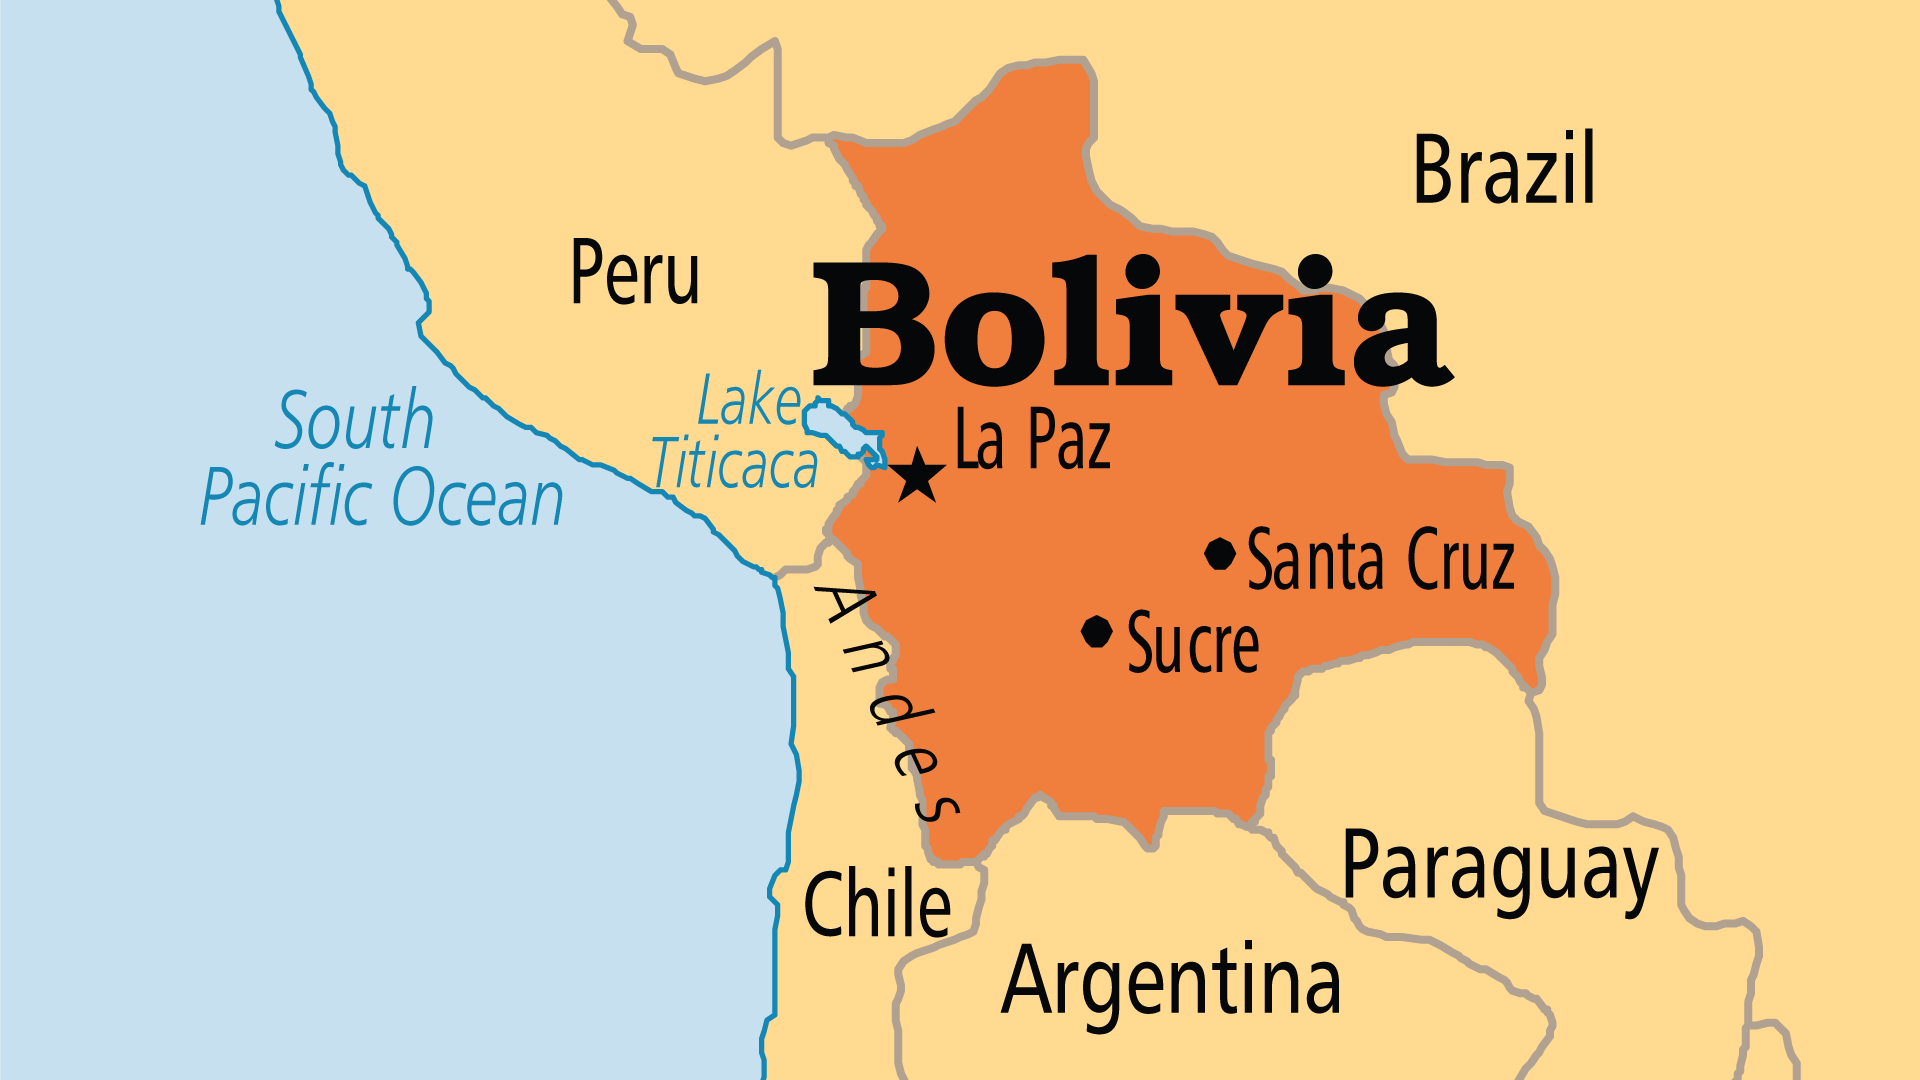 Bolivia (Operation World)